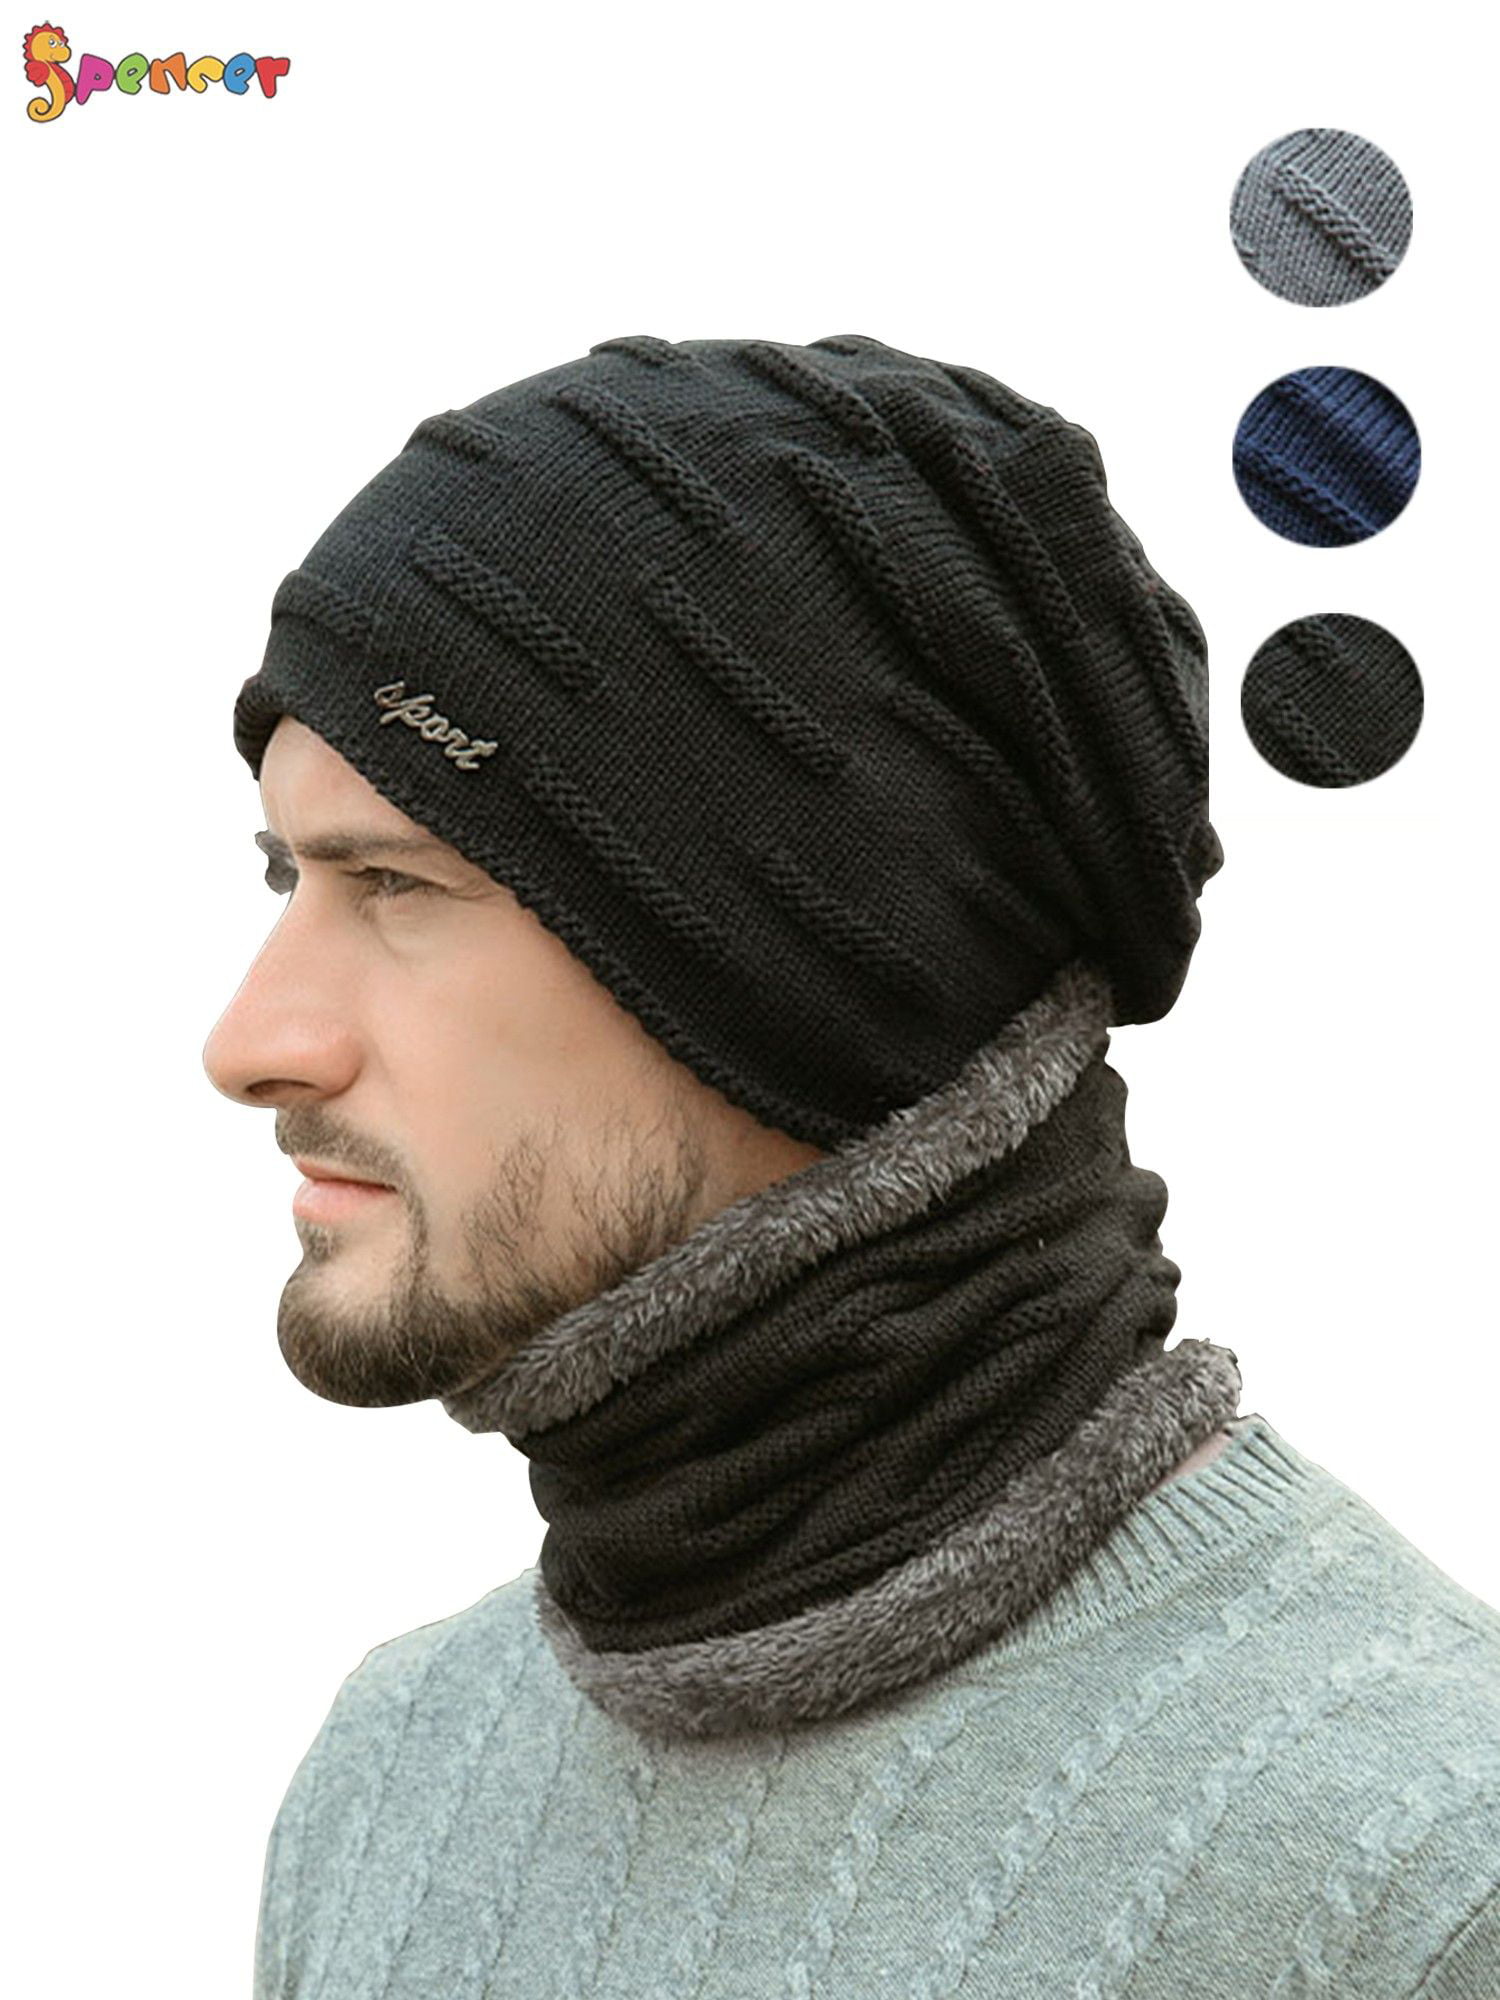 Mountain Inside Circle-1 Unisex Knitted Hat Winter Warm Skull Cap 